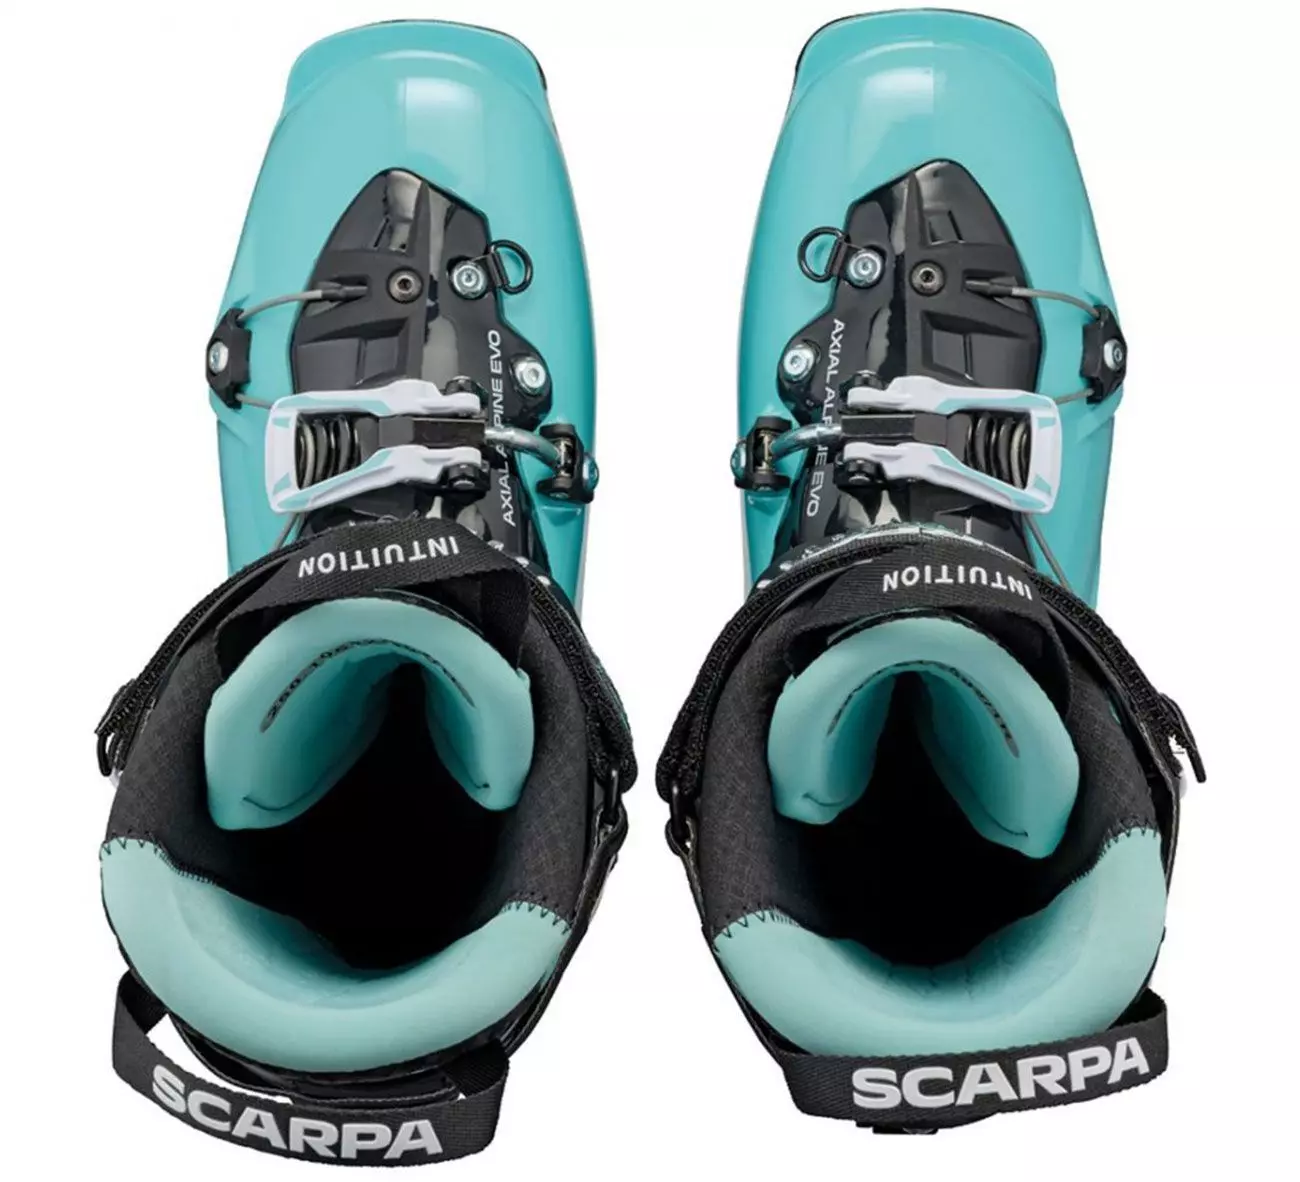 Women\'s touring ski boots Scarpa Gea